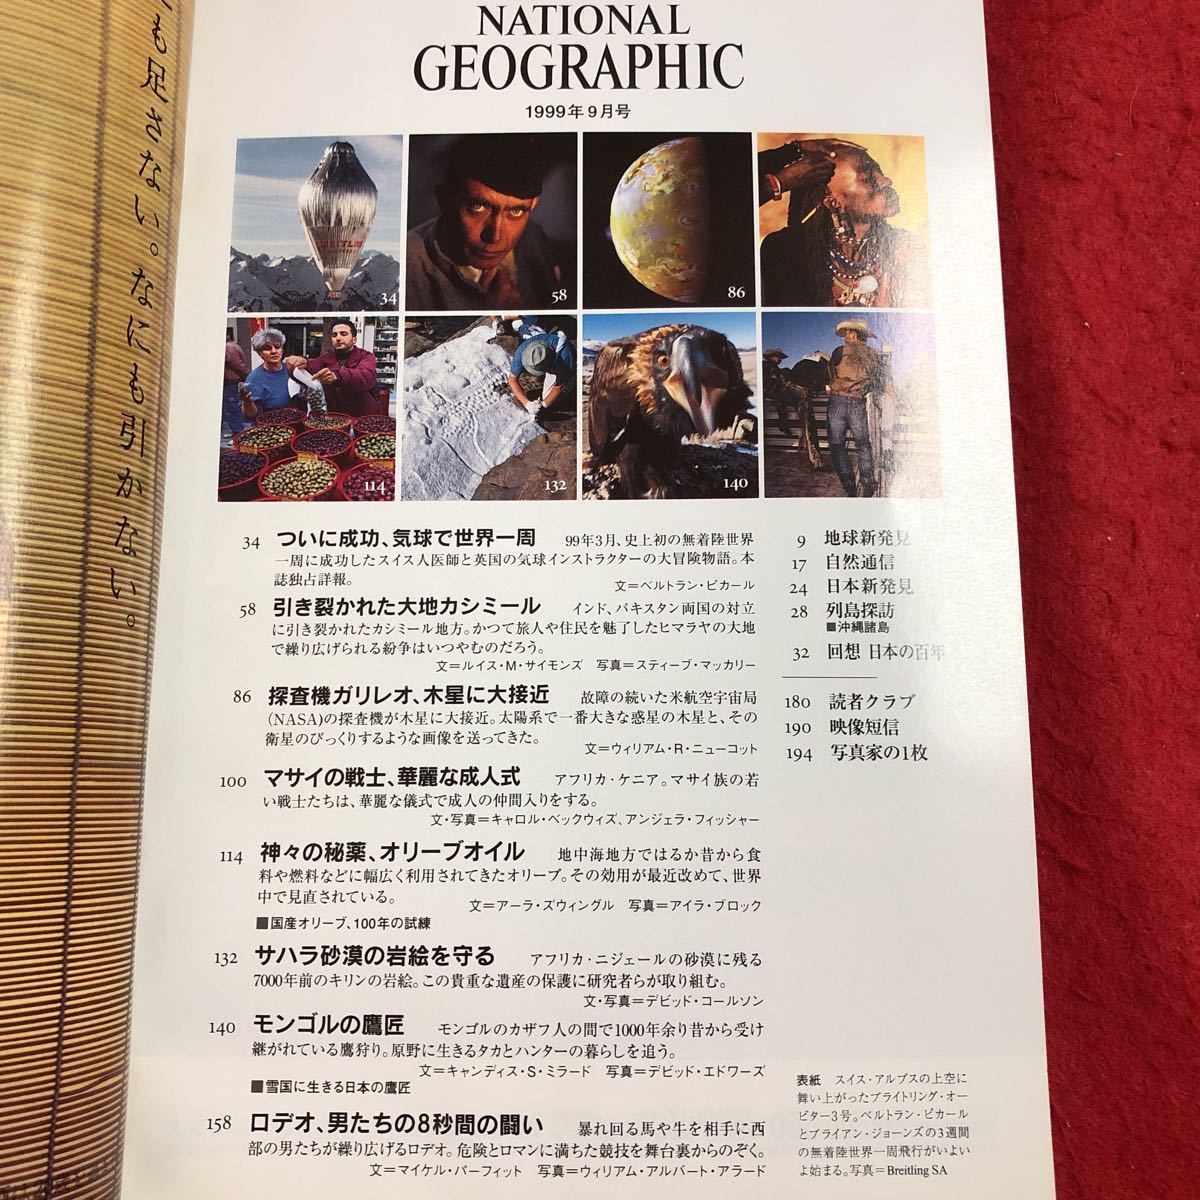 M6d-203 ナショナルジオグラフィック 日本版 1999年9月号 1998年9月15日 発行 日経ナショナルジオグラフィック社 雑誌 写真 気球 世界一周_画像3